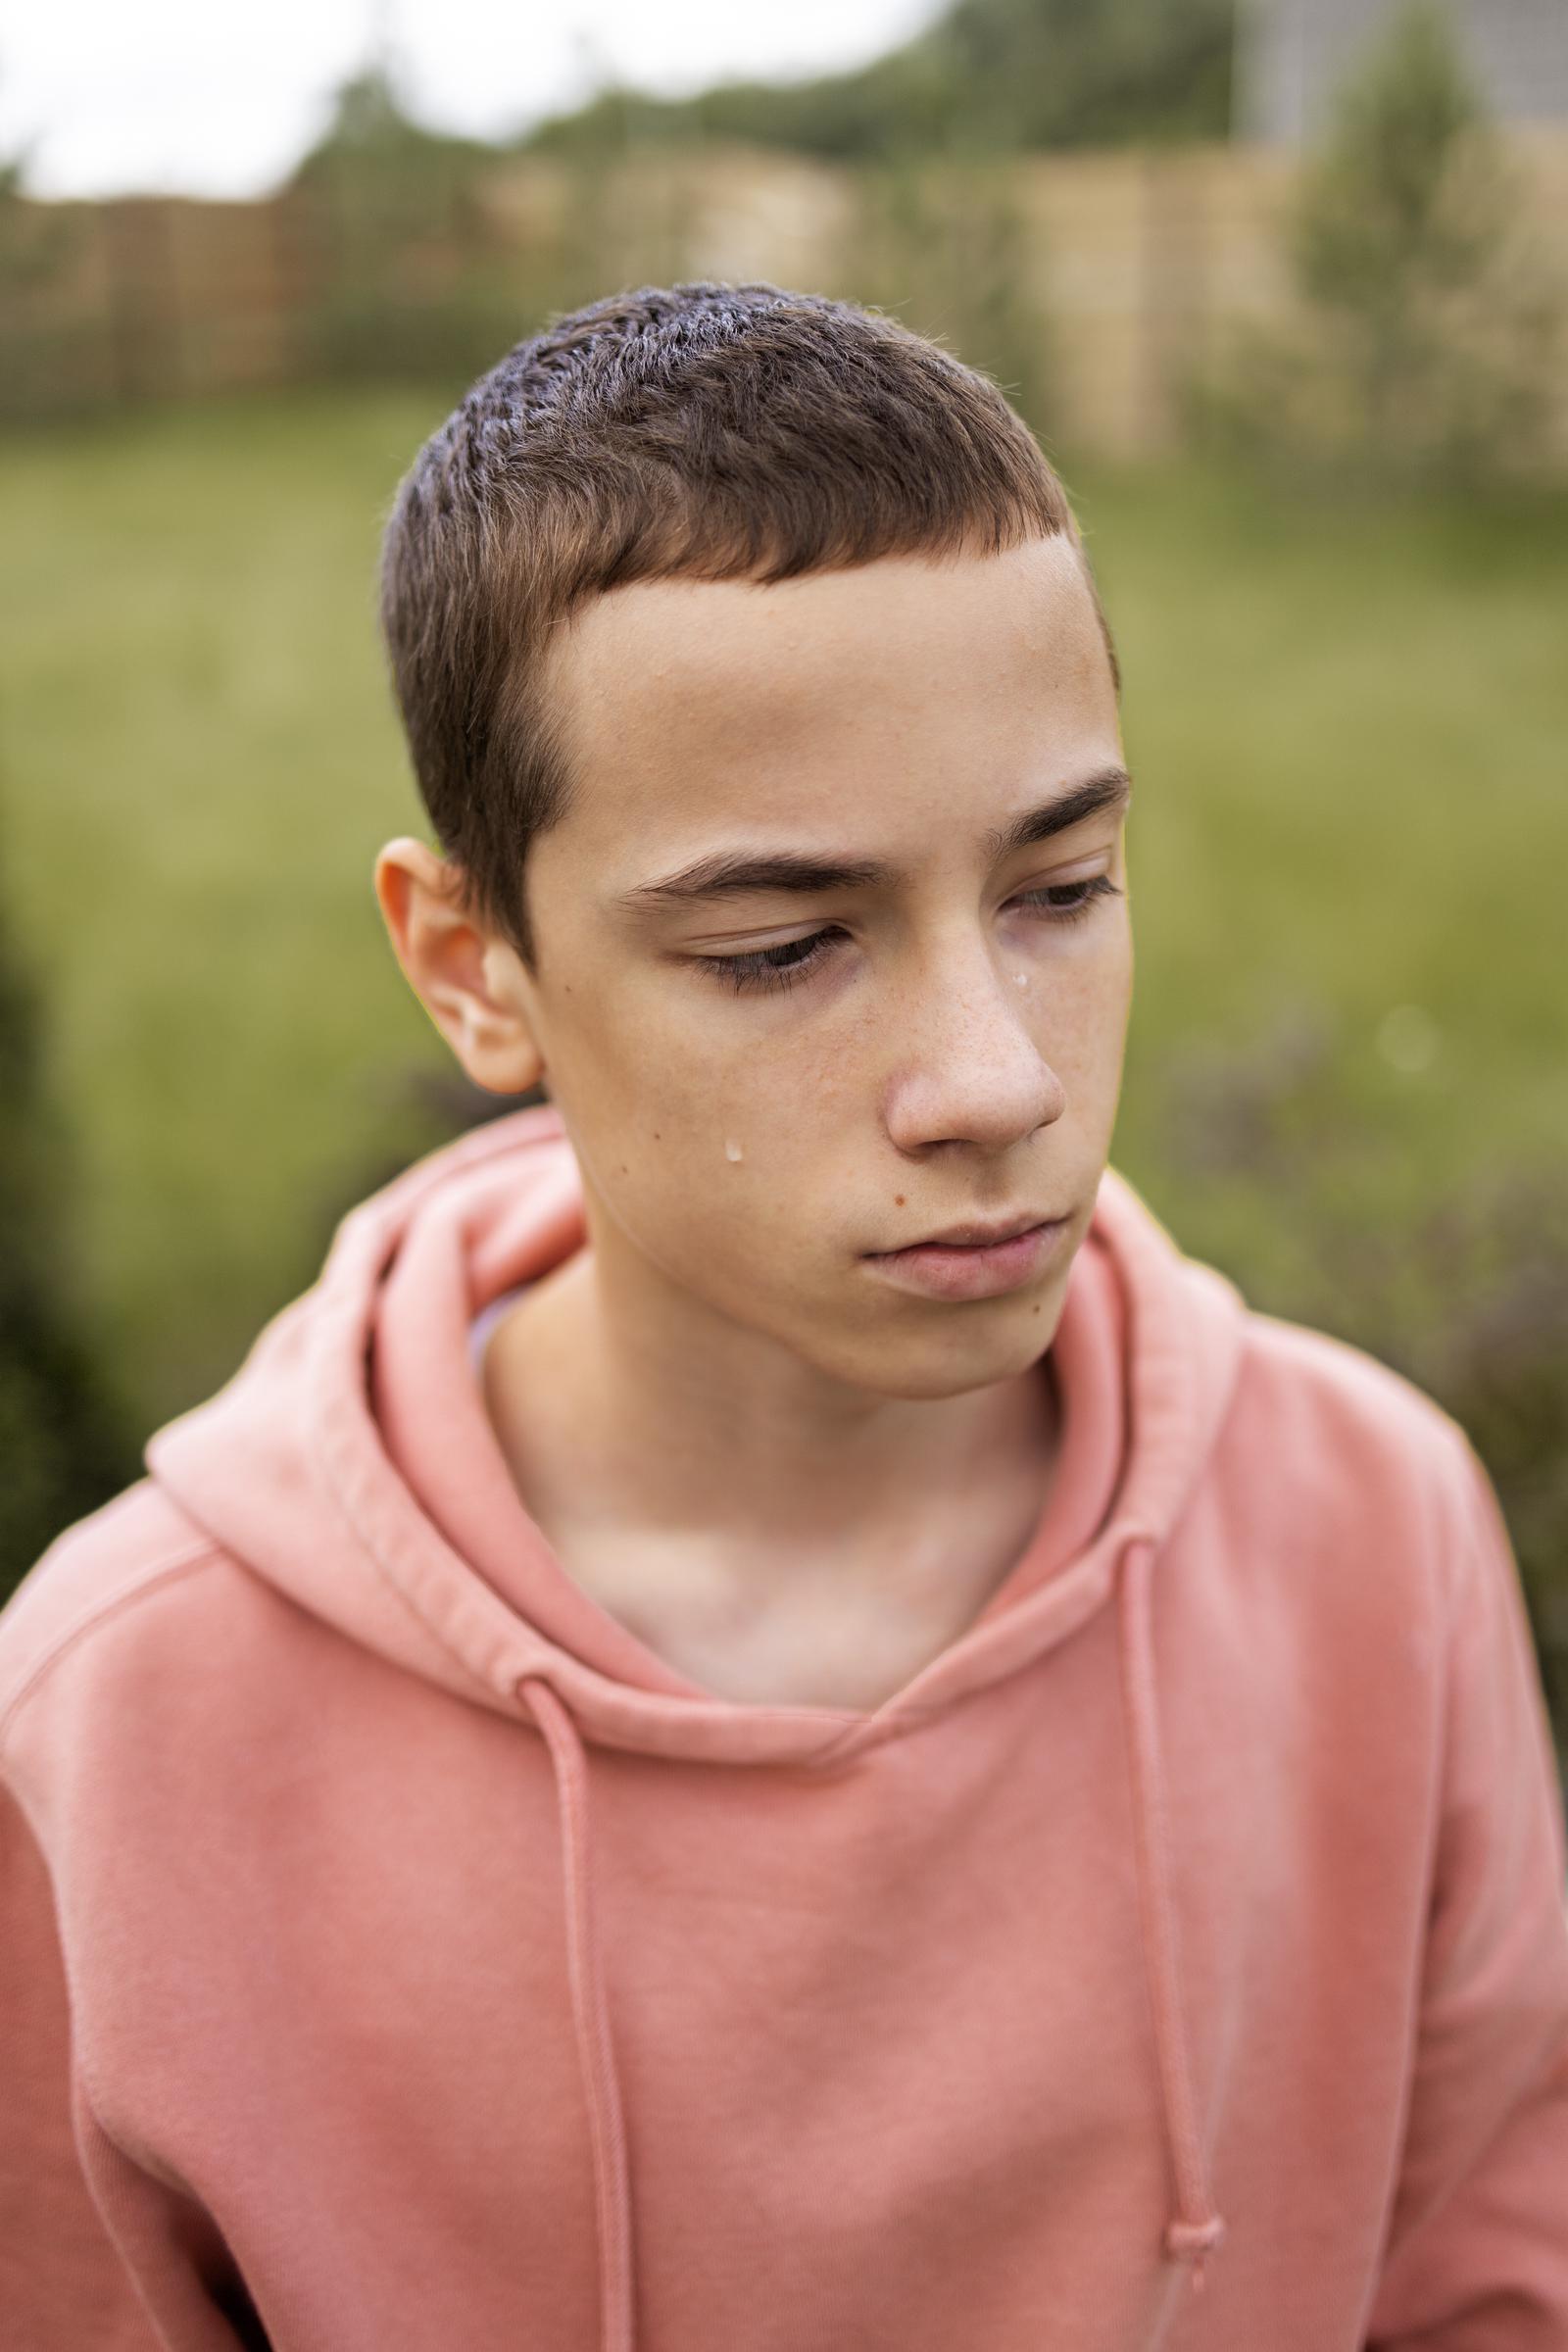 A crying teenager | Source: Freepik